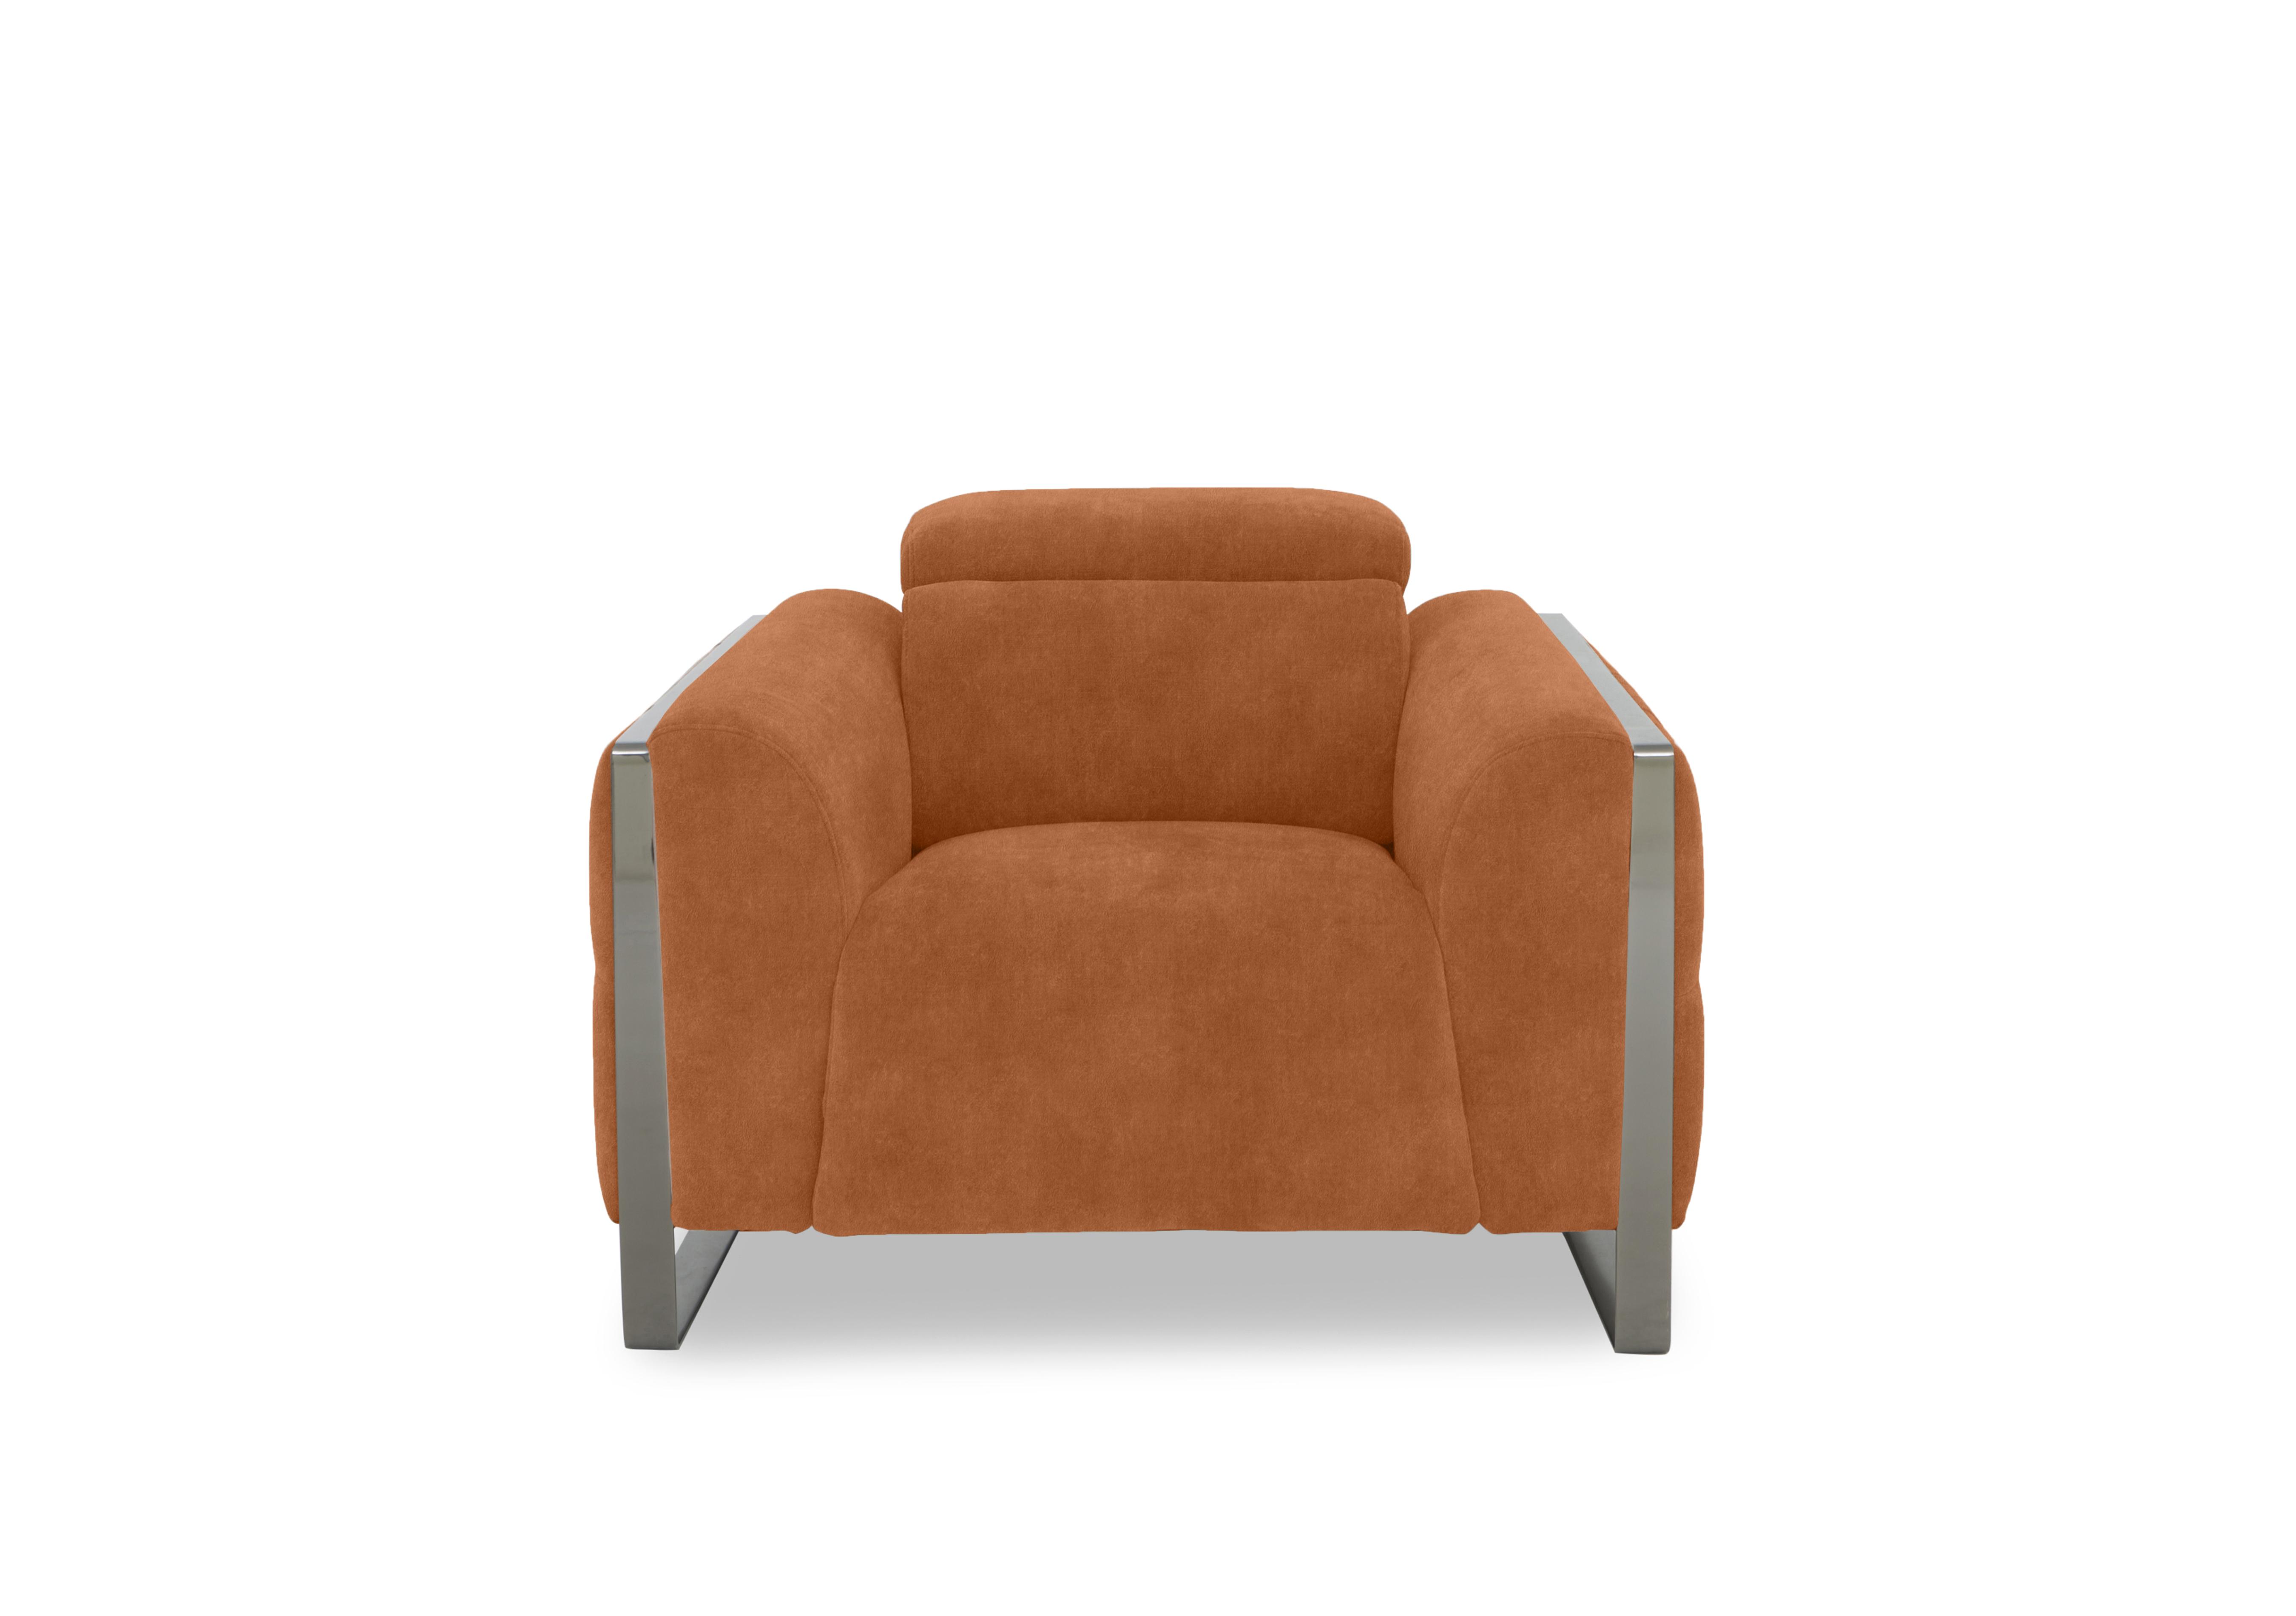 Gisella Fabric Chair in Dexter Pumpkin 43509 on Furniture Village